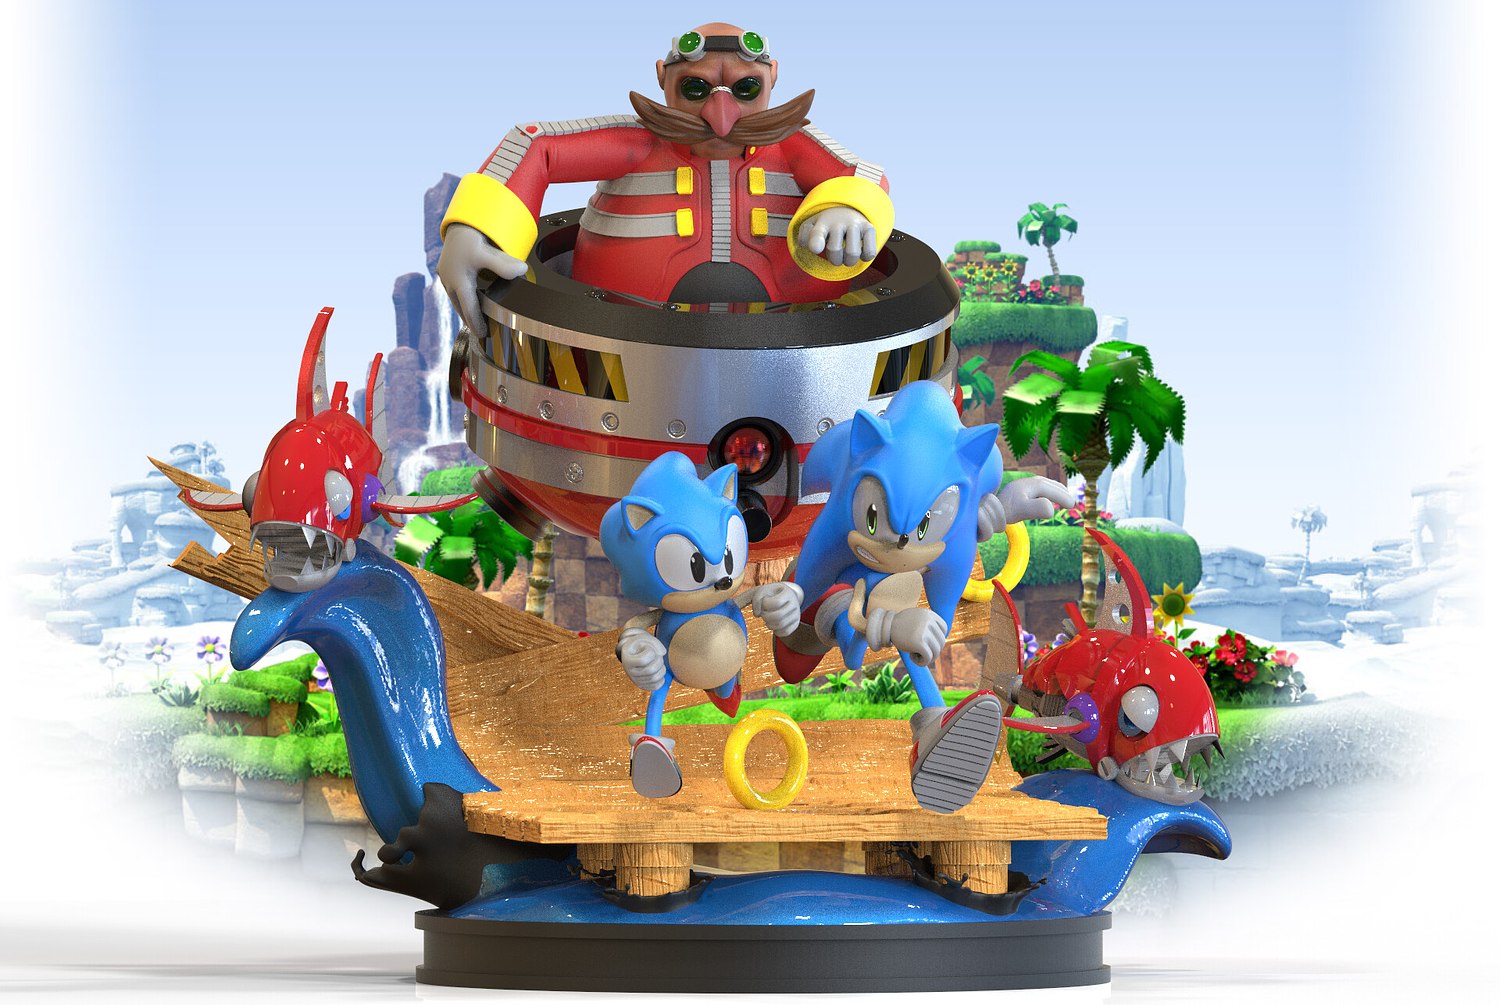 Sonic Generations Diorama